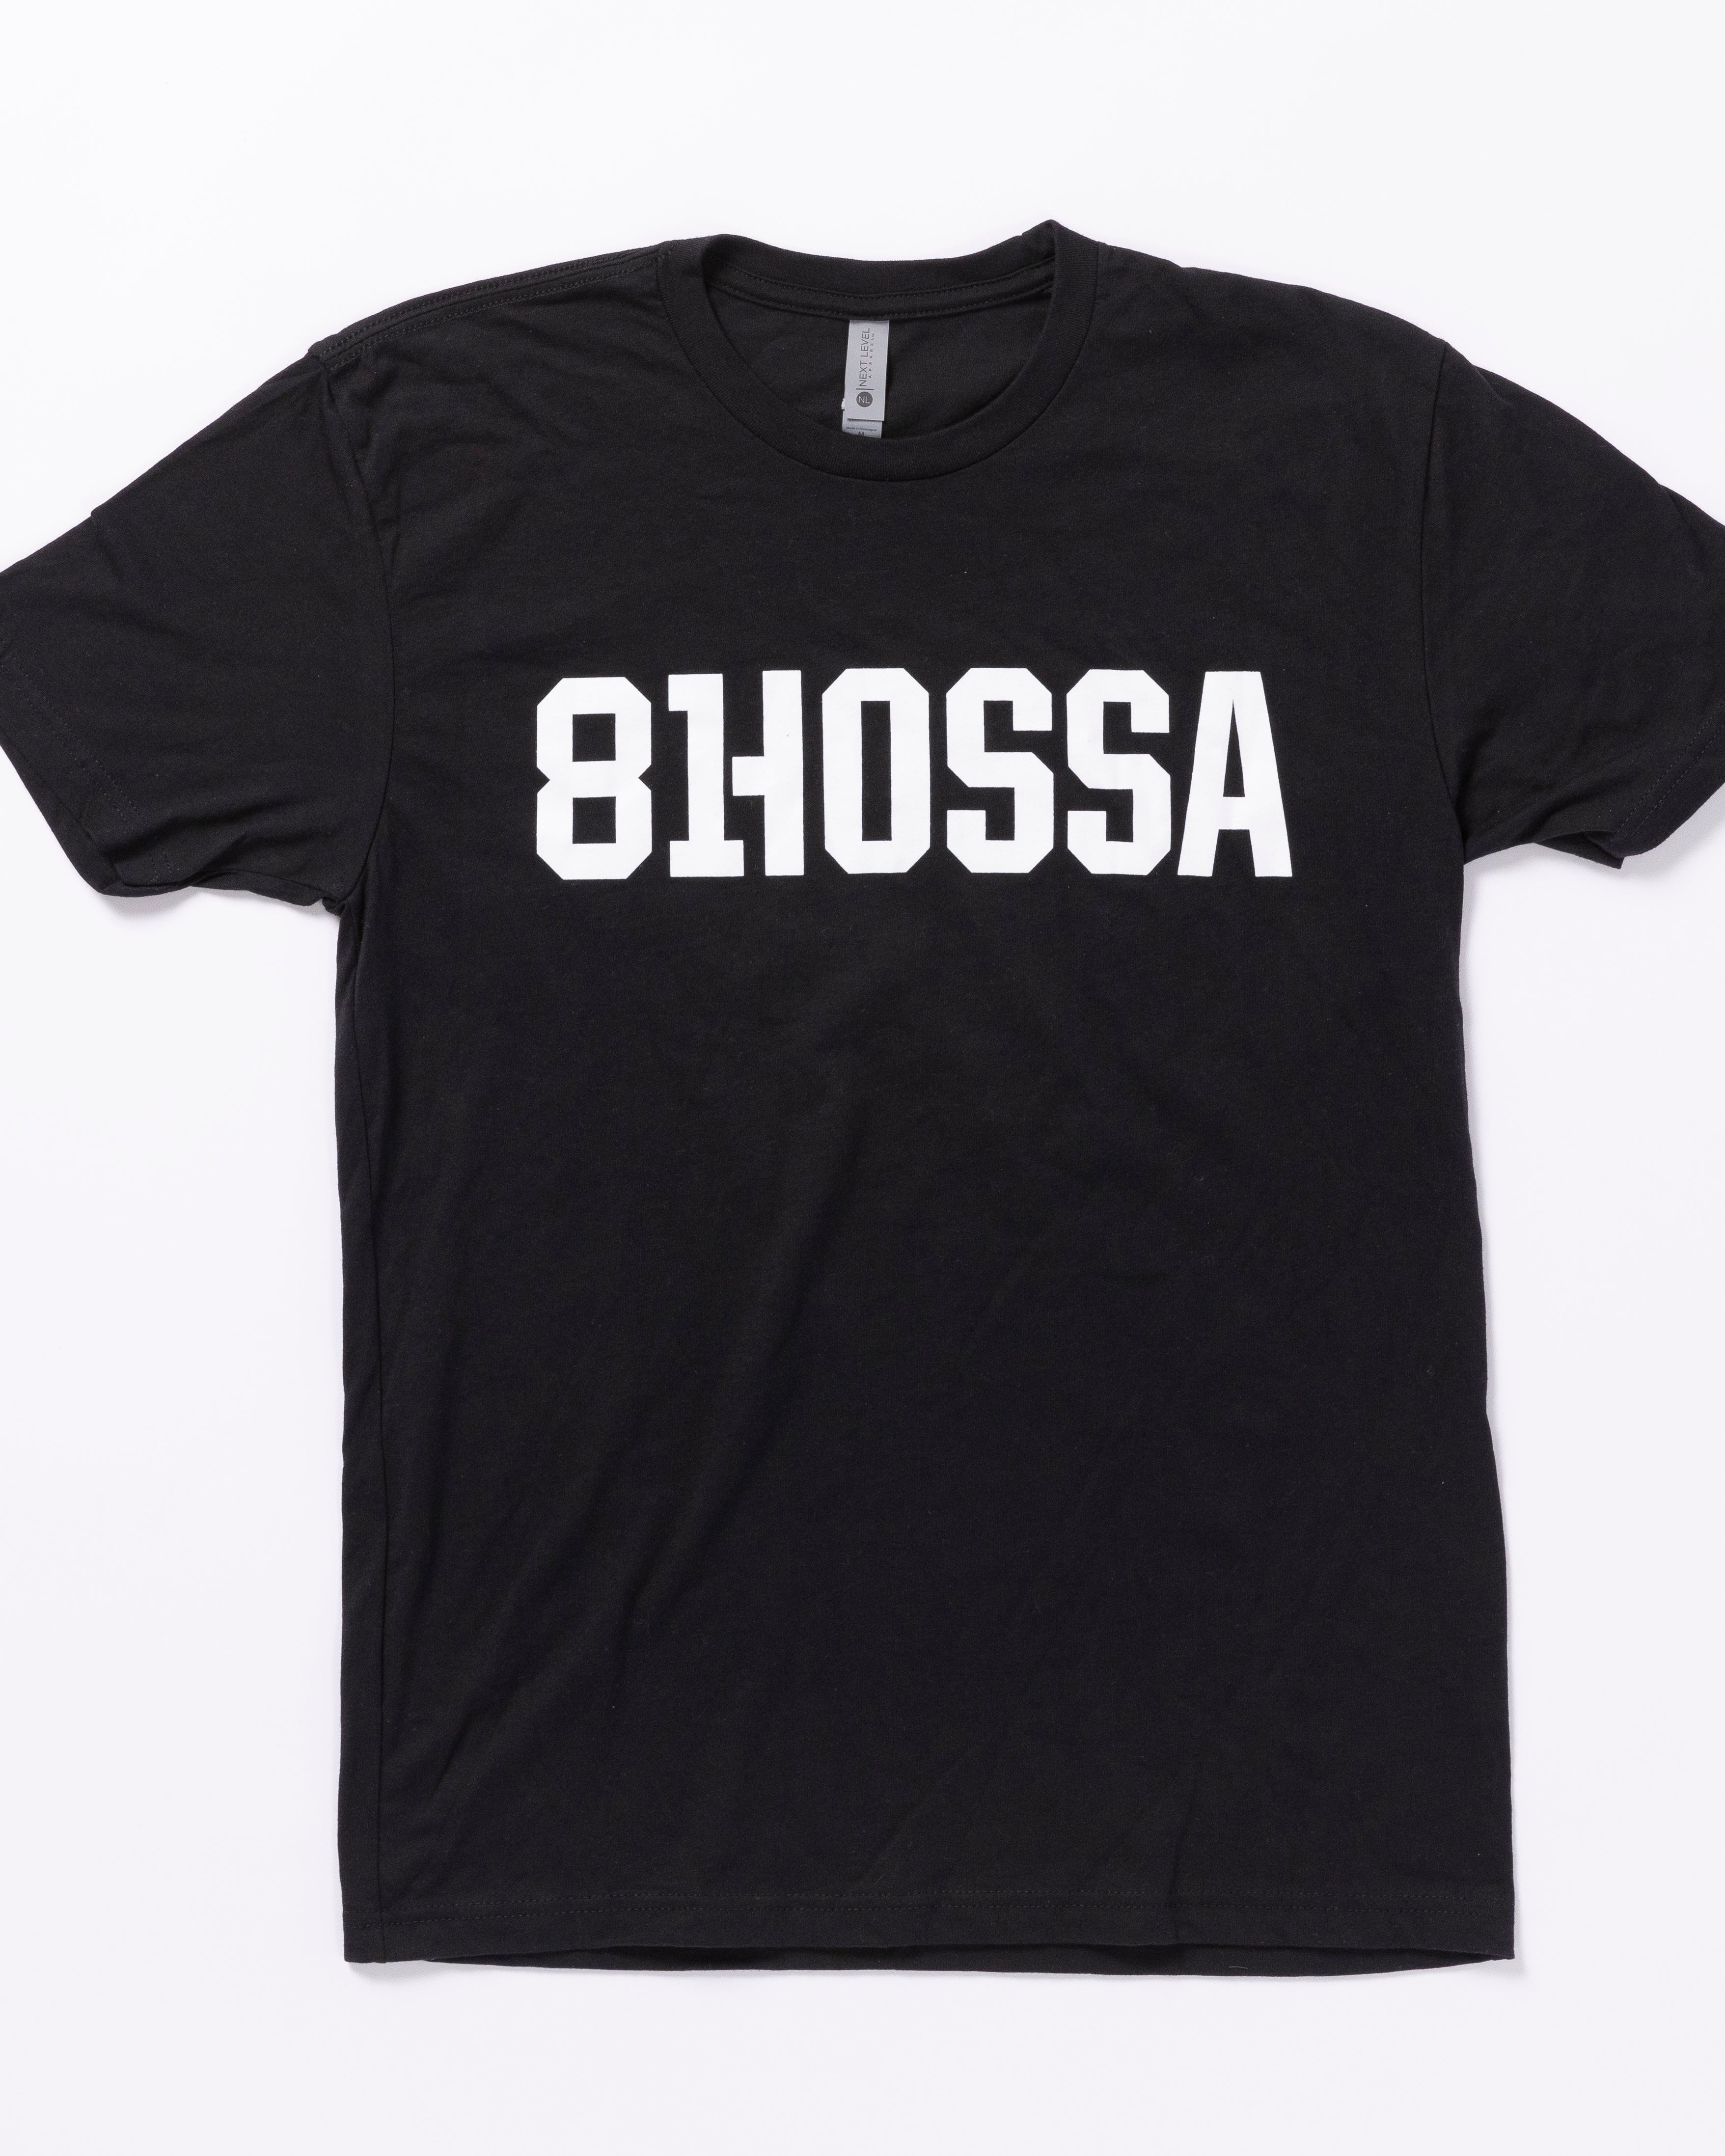 Marian Hossa #81 Chicago Blackhawks Reebok Youth High Definition Shirt